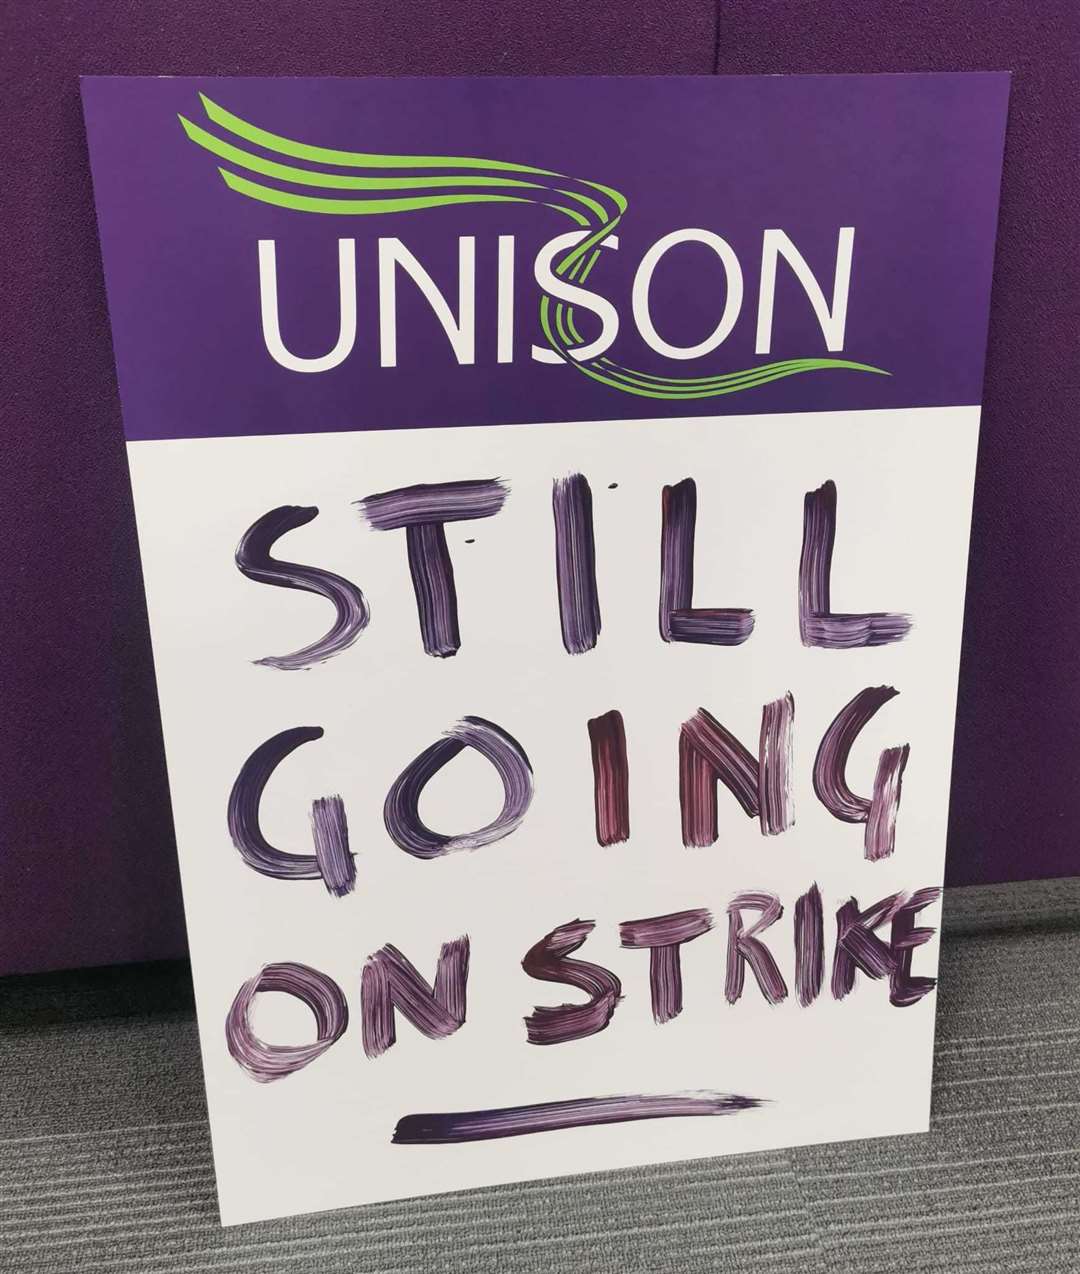 Unison will take strike action